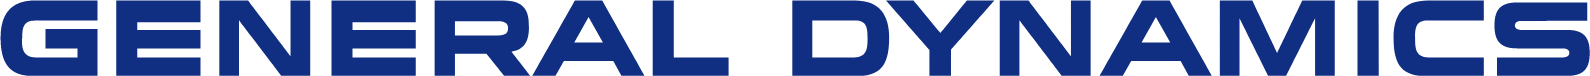 General Dynamics logo large (transparent PNG)